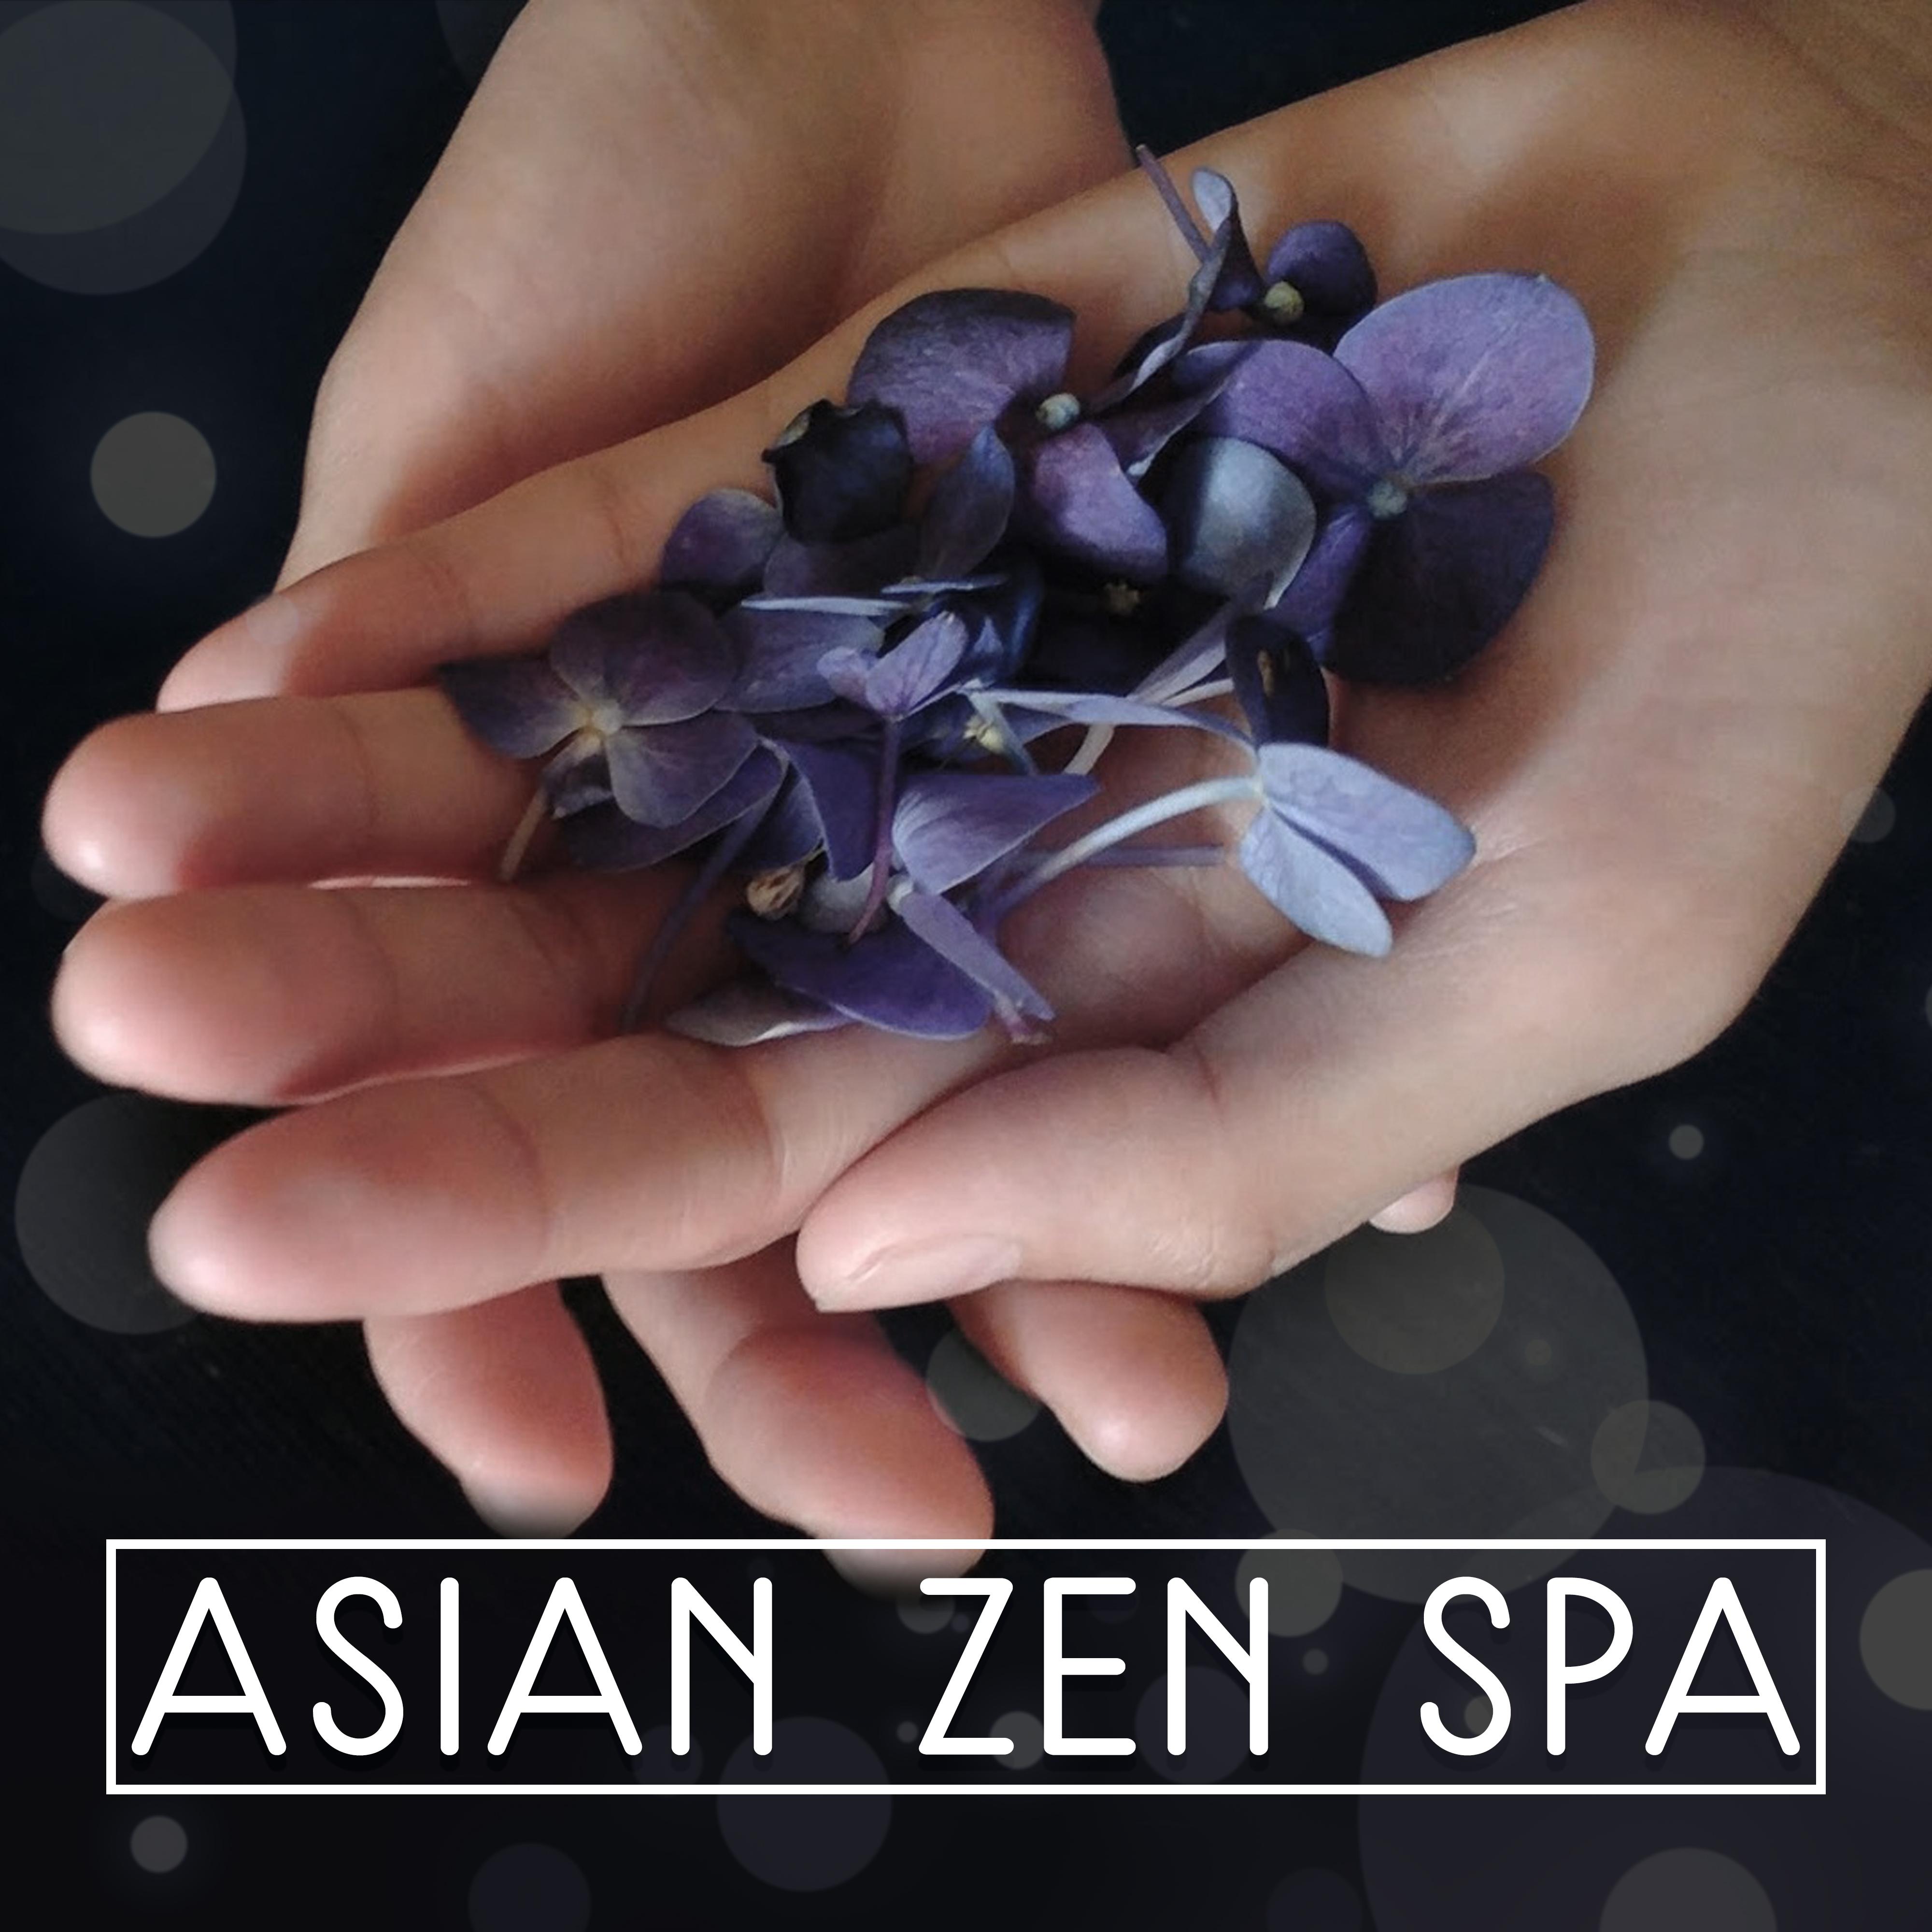 Asian Zen Spa  Relaxing Music, Healing Sounds for Massage, Wellness, Deep Sleep, Nature Sounds for Meditation, Spa Dreams, Tranquility